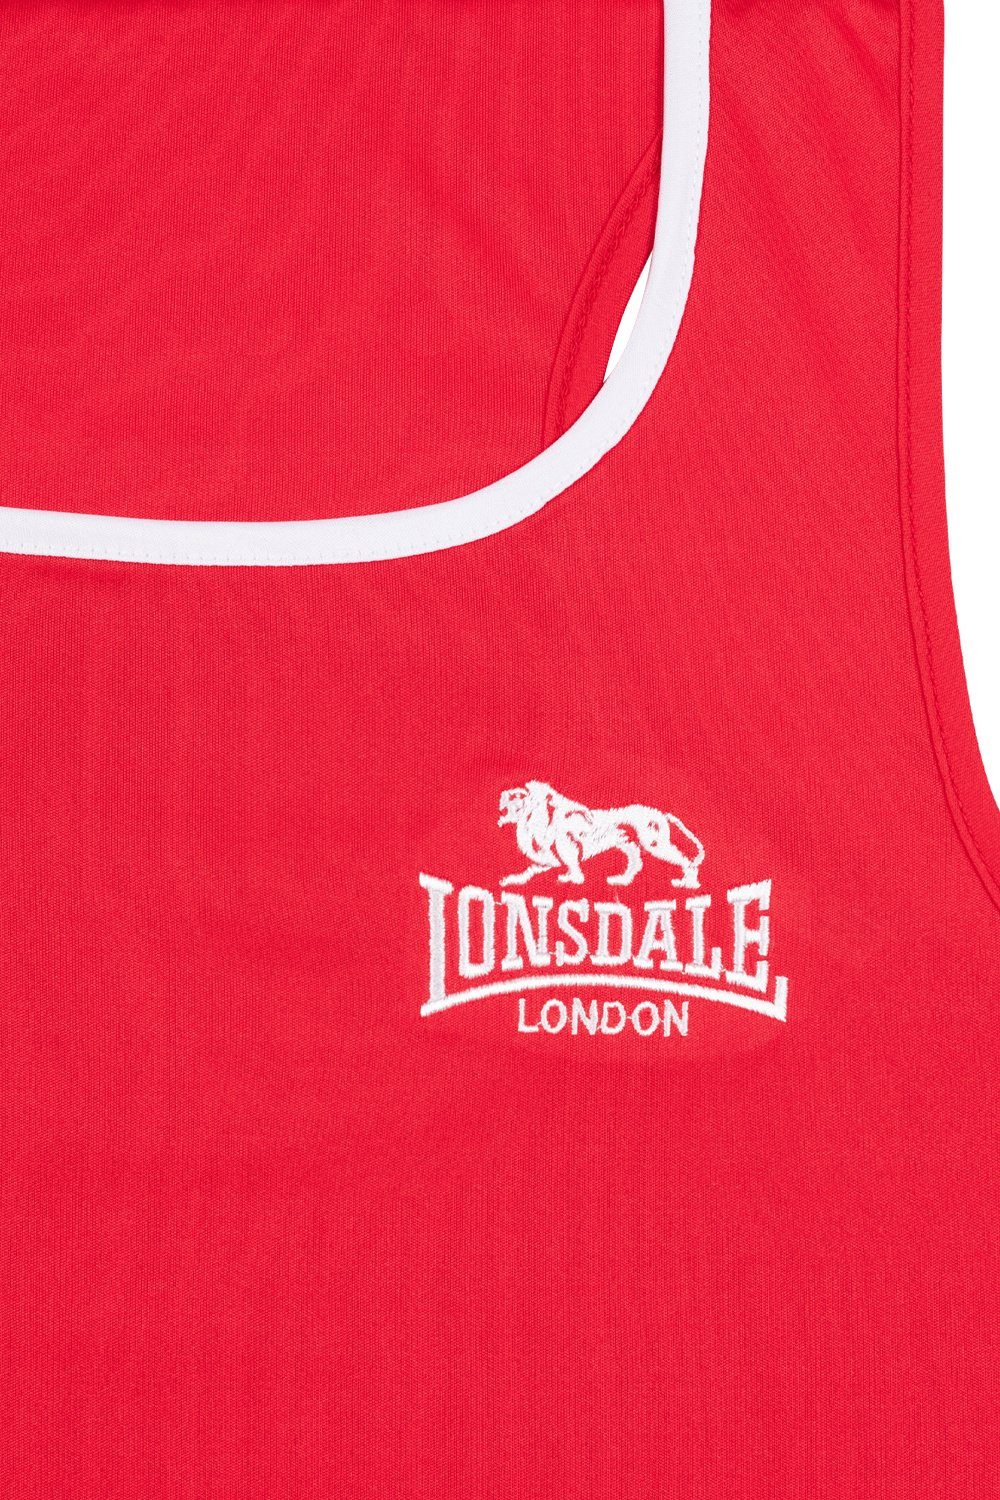 Lonsdale Herren Lonsdale red Singlet T-Shirt Sporttop Erwachsene Amateur